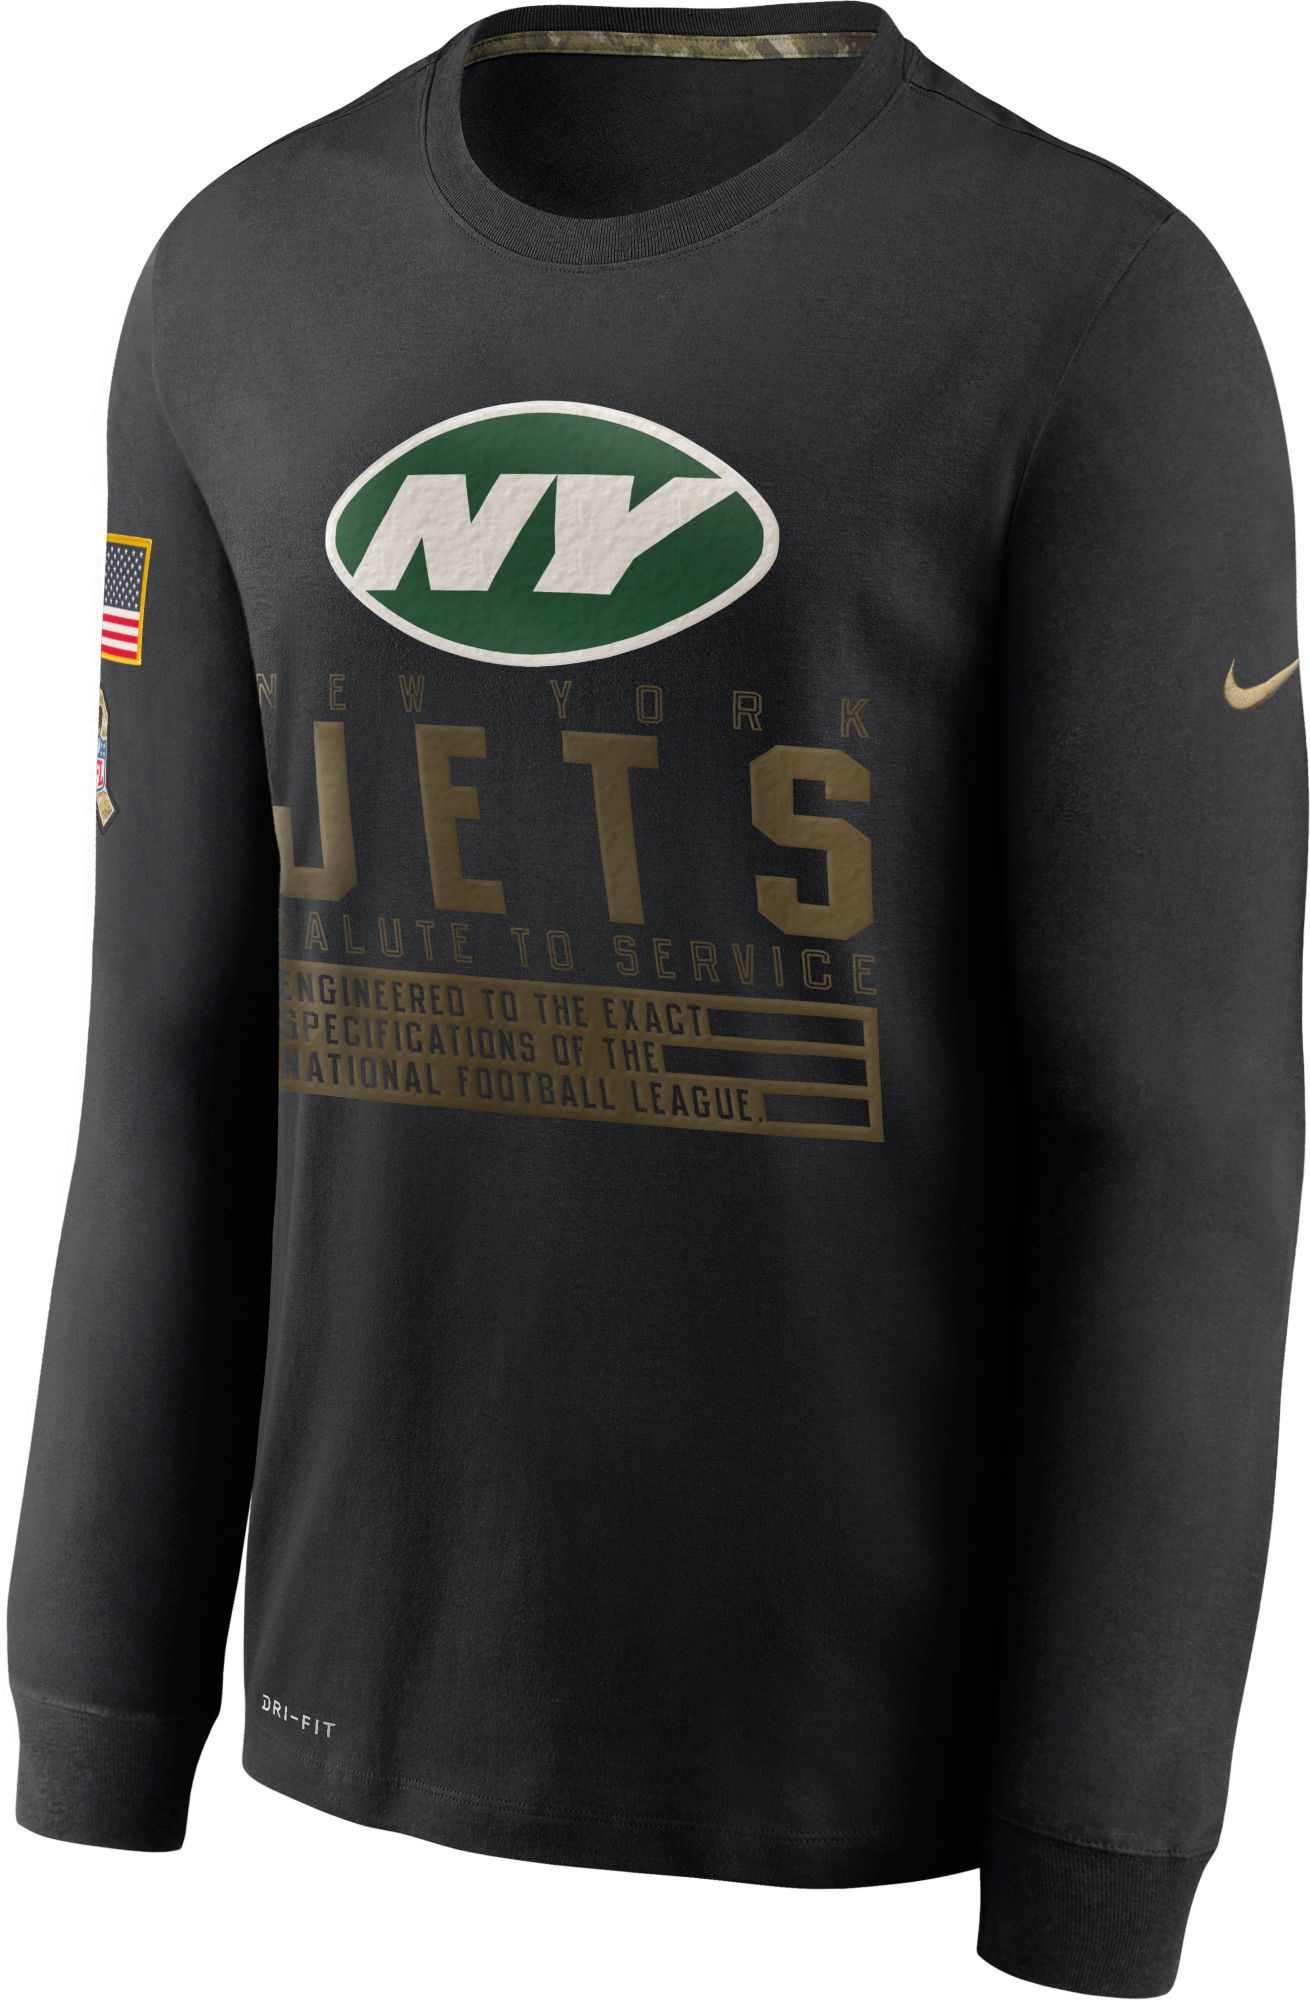 New York Jets Black Long Sleeve Shirt 